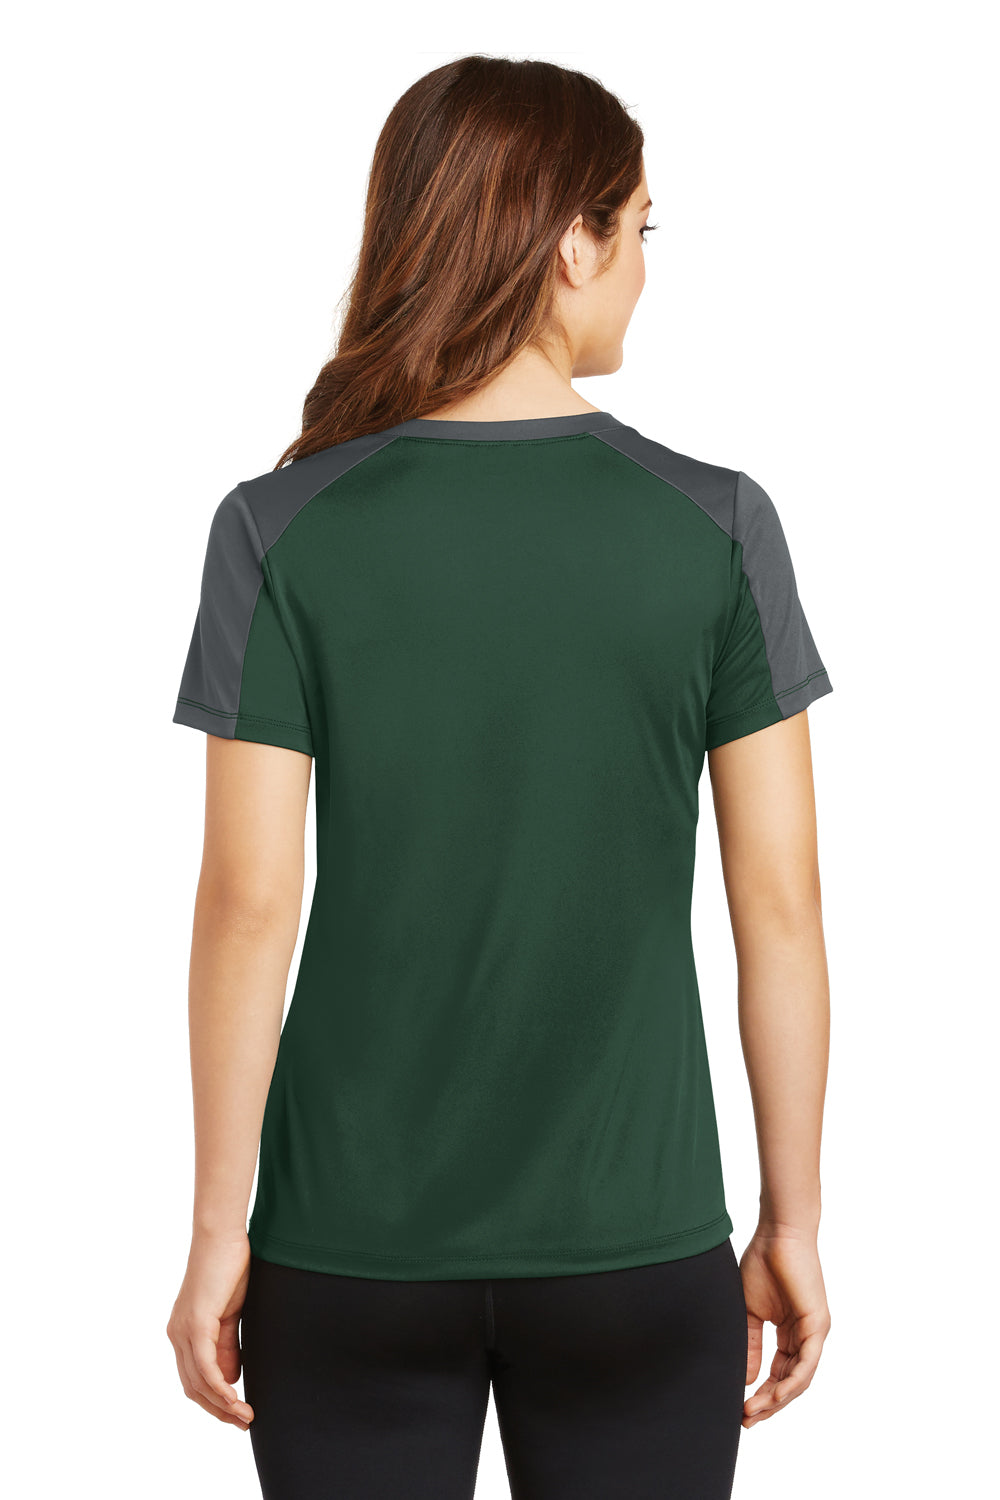 Sport-Tek LST354 Womens Competitor Moisture Wicking Short Sleeve V-Neck T-Shirt Forest Green/Grey Back